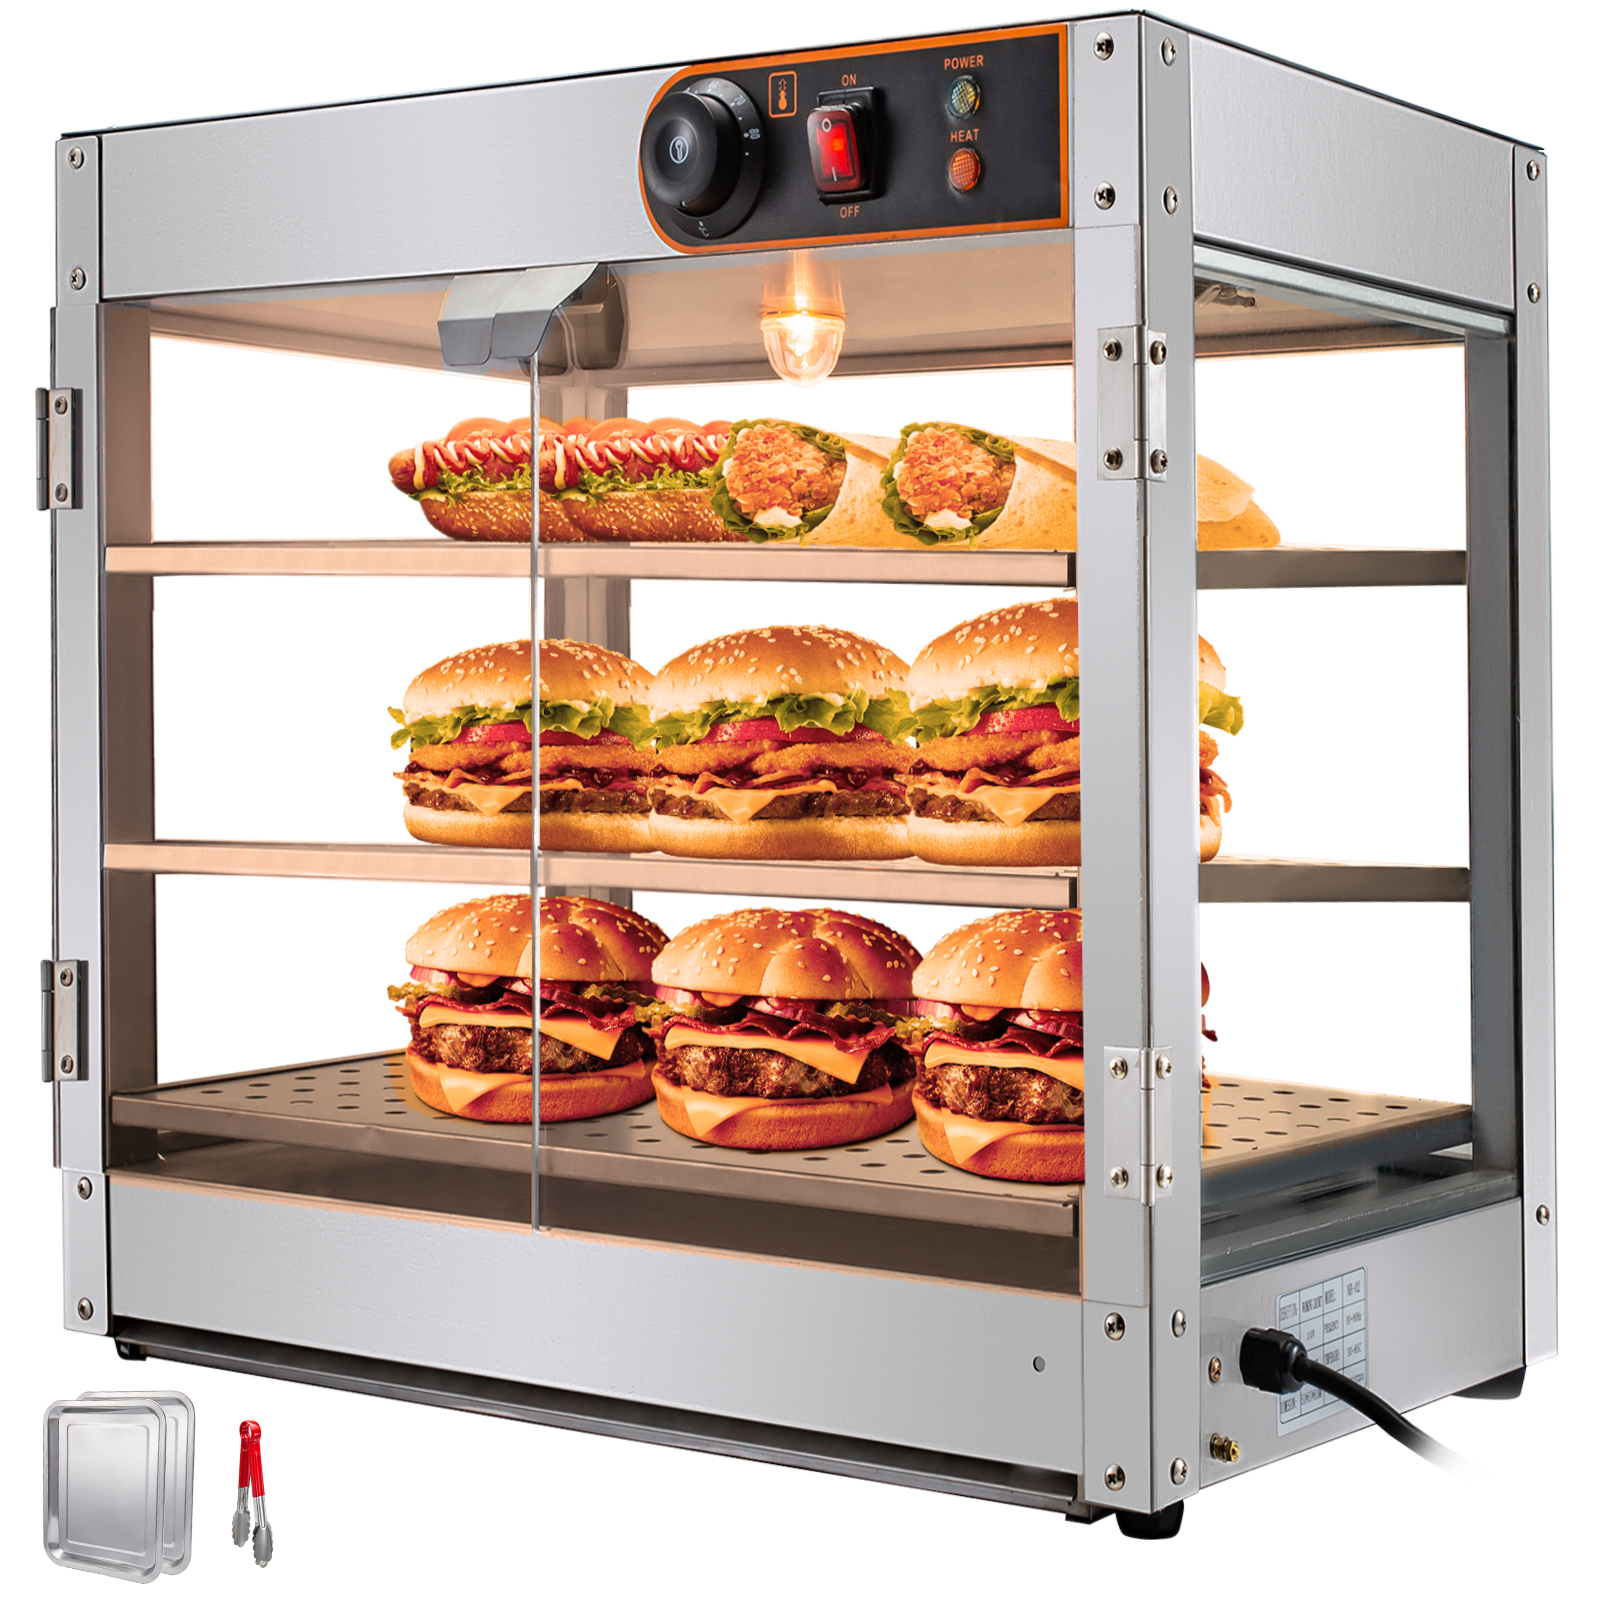 110V Commercial Food Warmer 3 shelves Heat Food Pizza Display